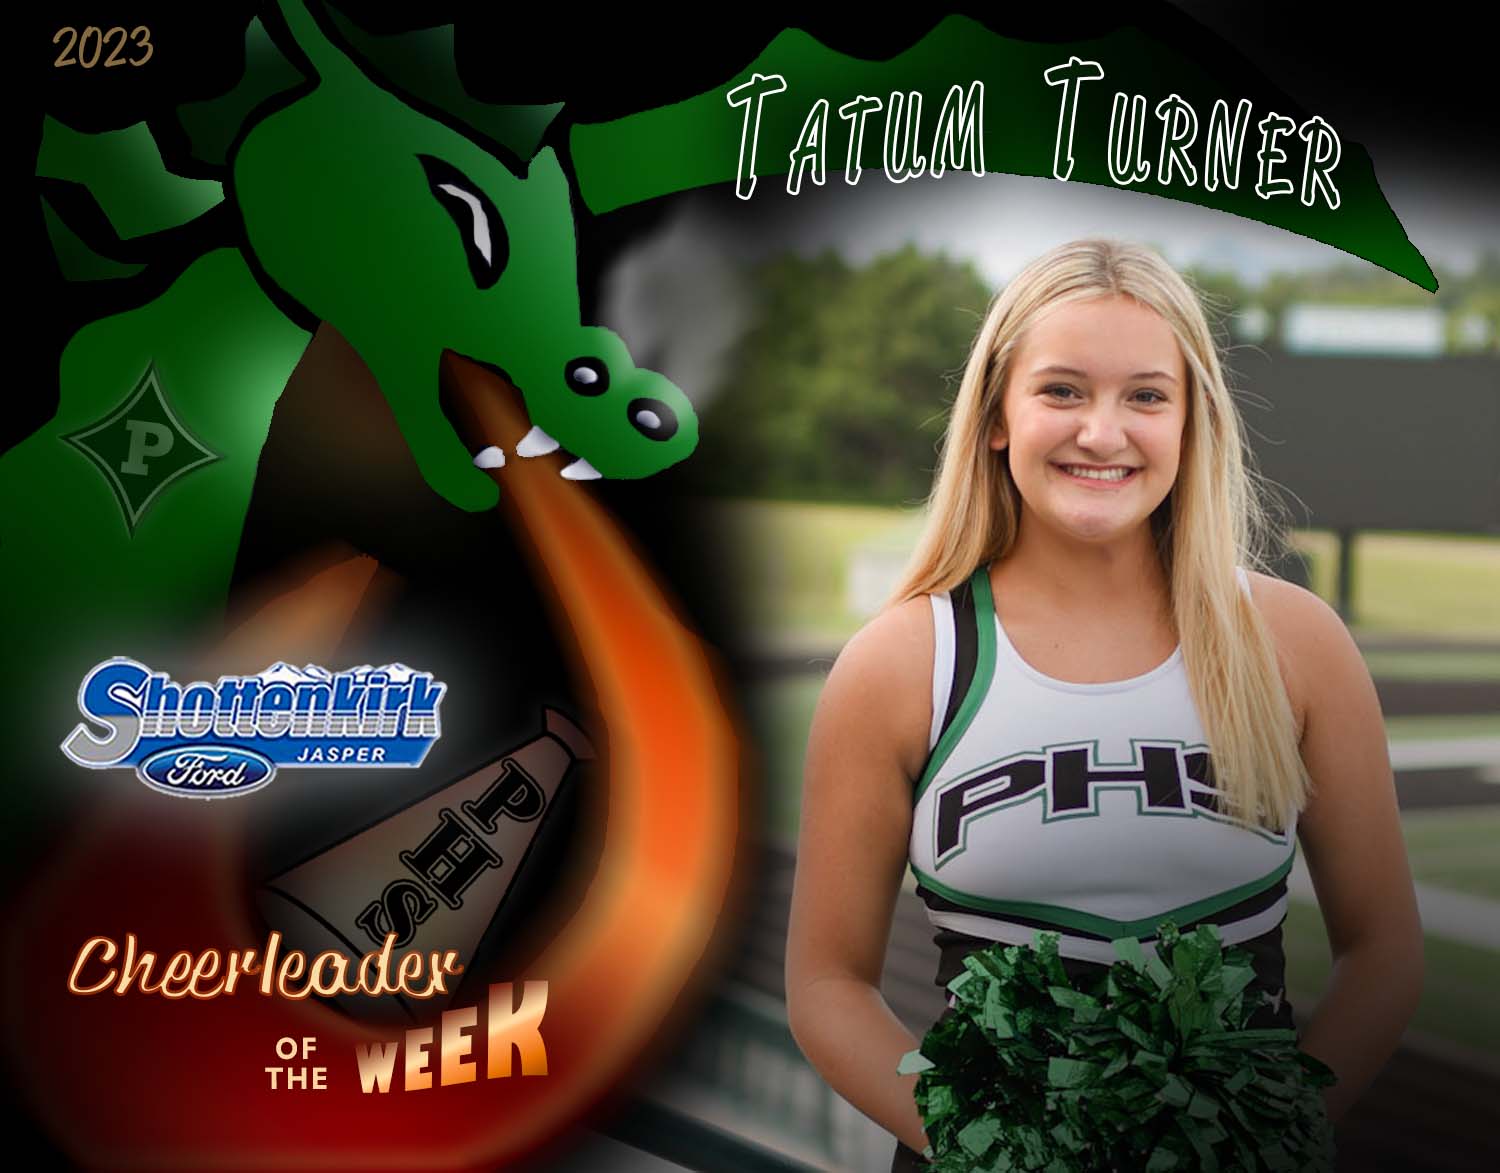 PHS Cheerleader of the Week #3 - Tatum Turner